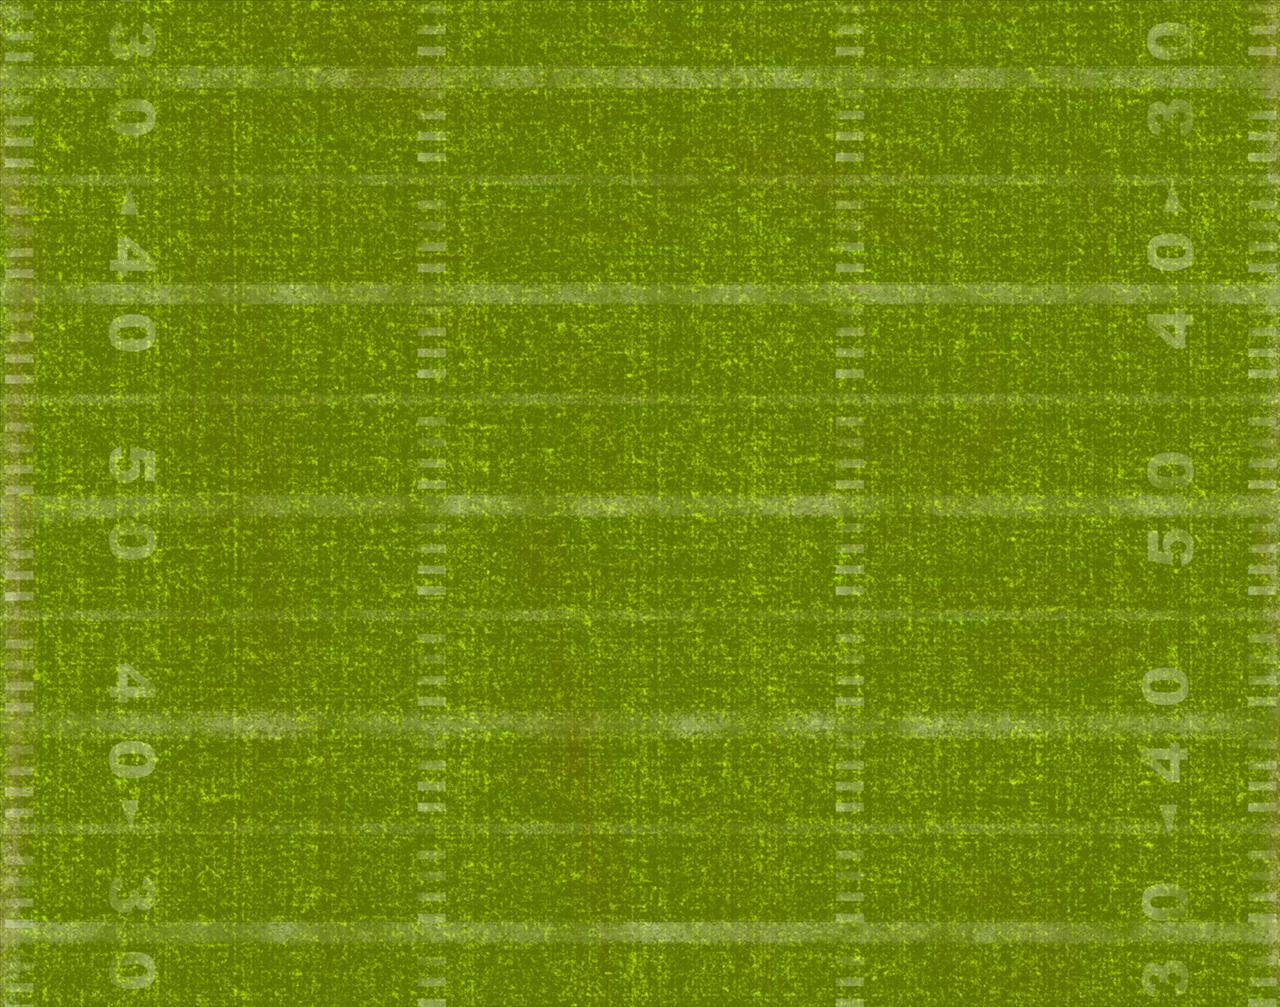 Football Field Background HD Wallpaper